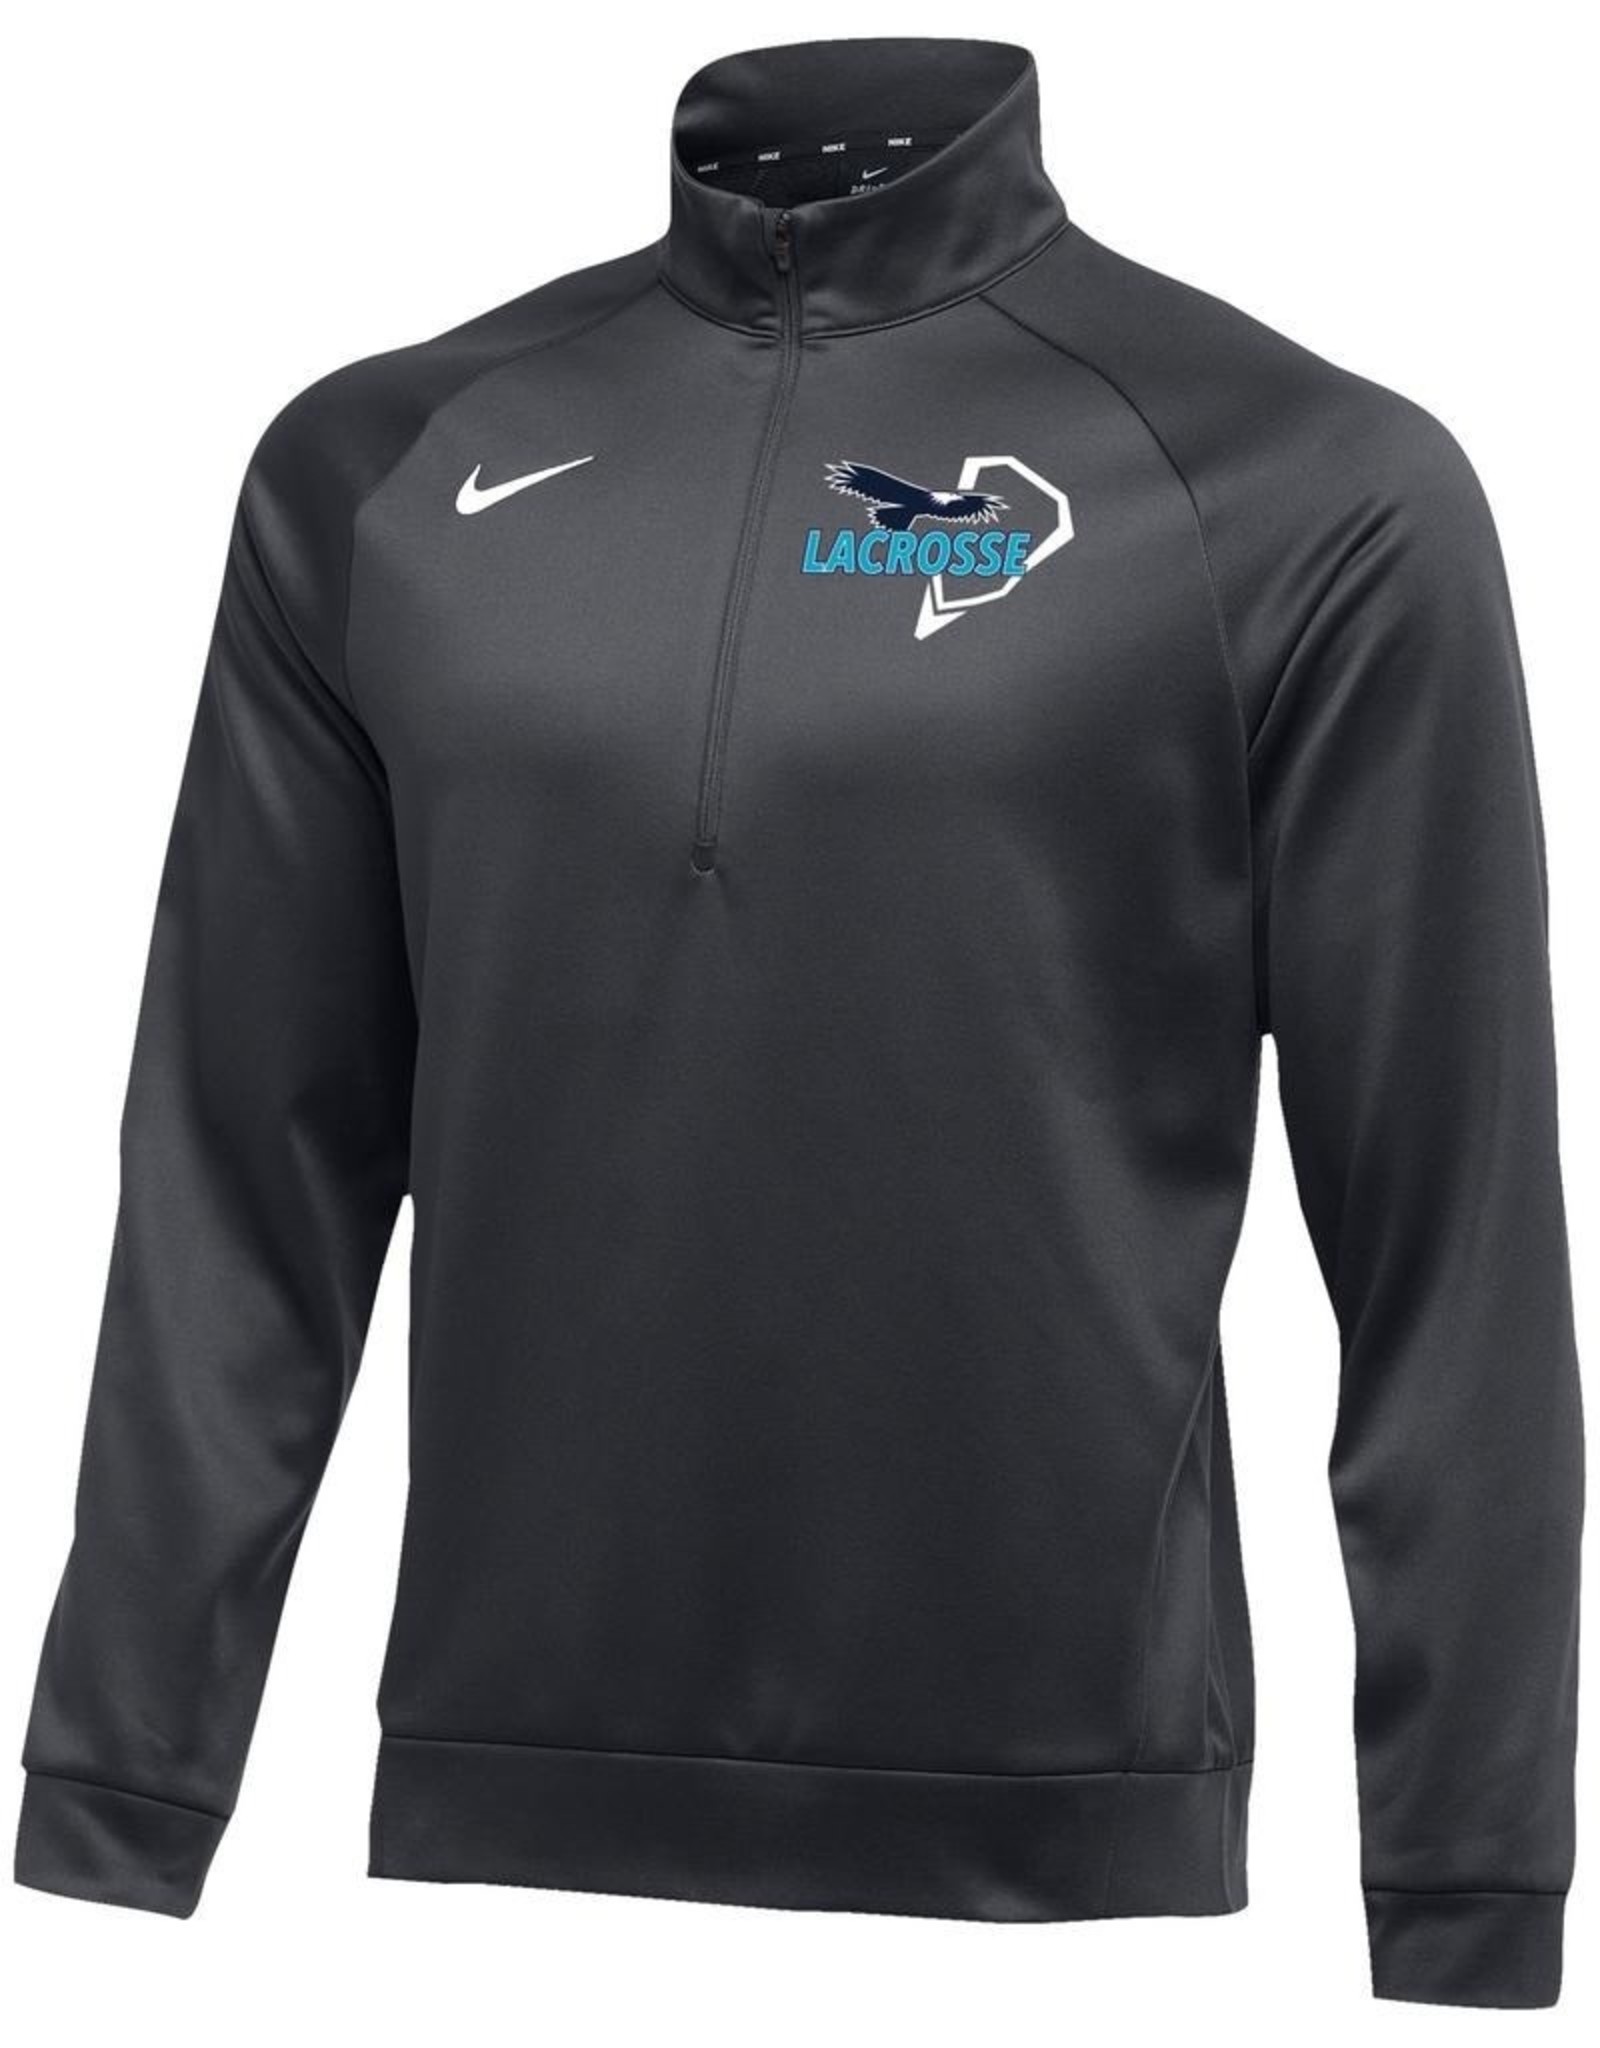 NON-UNIFORM Lacrosse - Nike Therma 1/4 Zip, Unisex